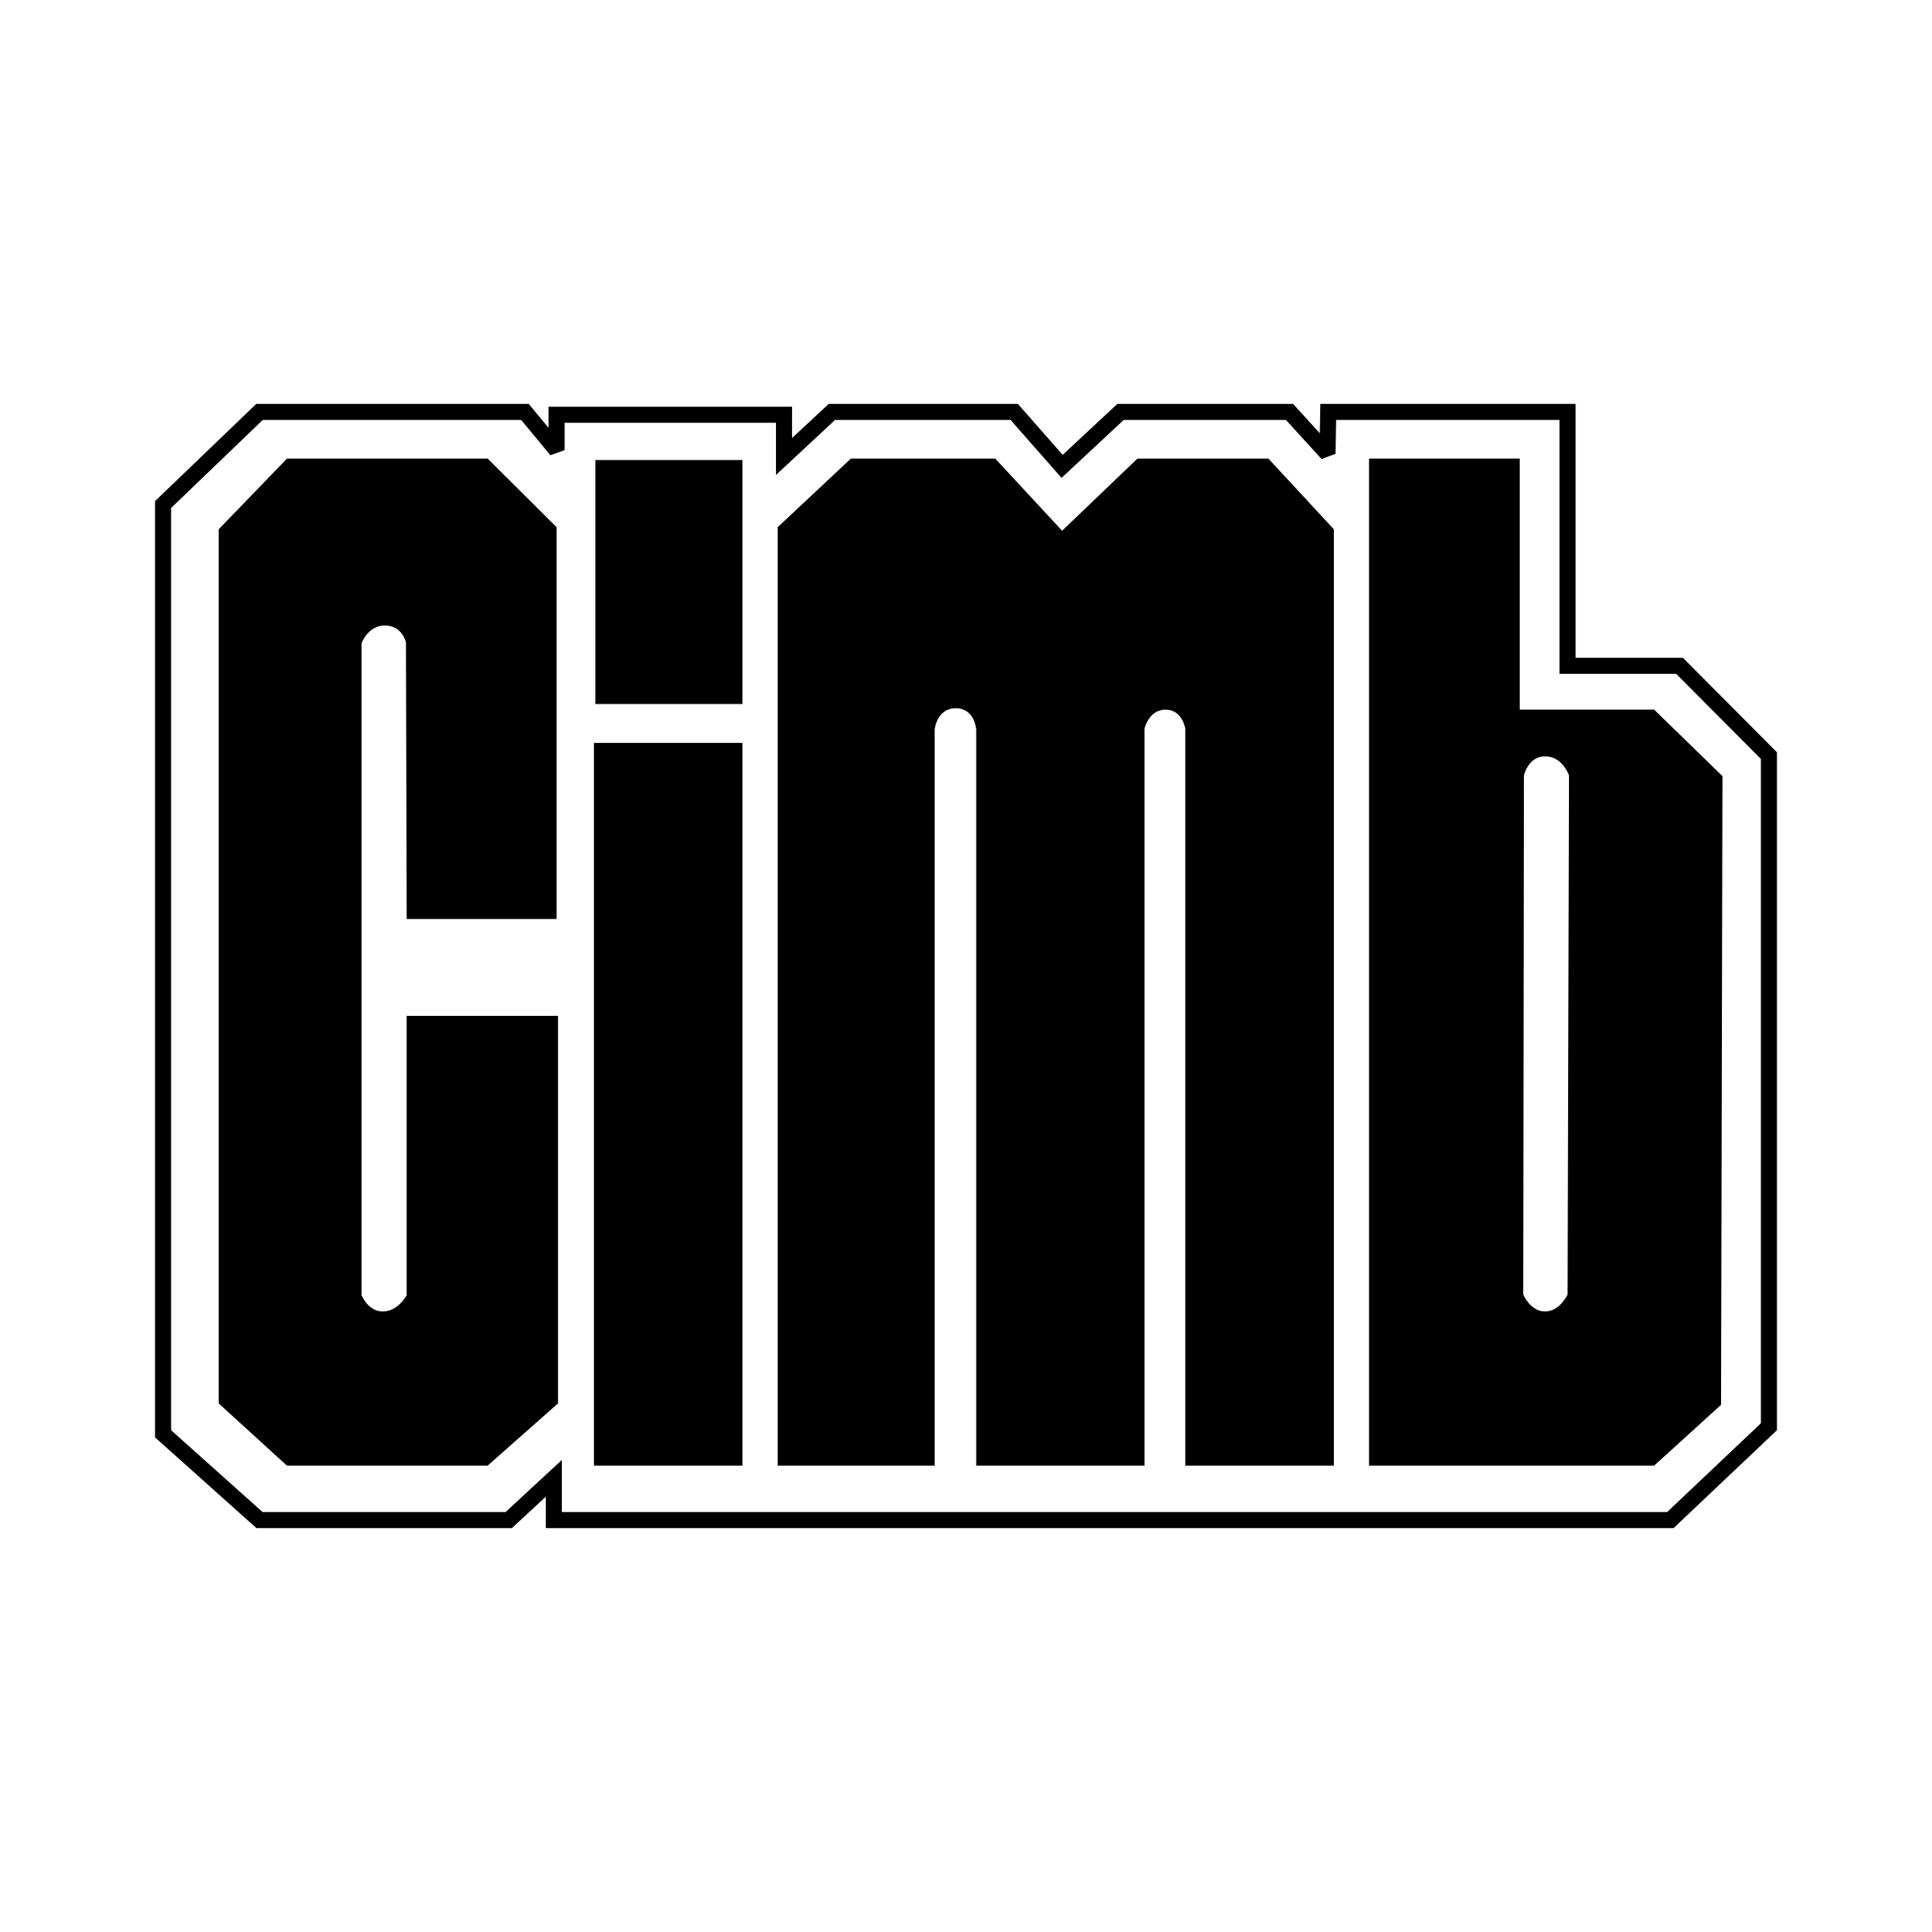 CIMB Logo - CIMB Logo PNG Transparent & SVG Vector - Freebie Supply